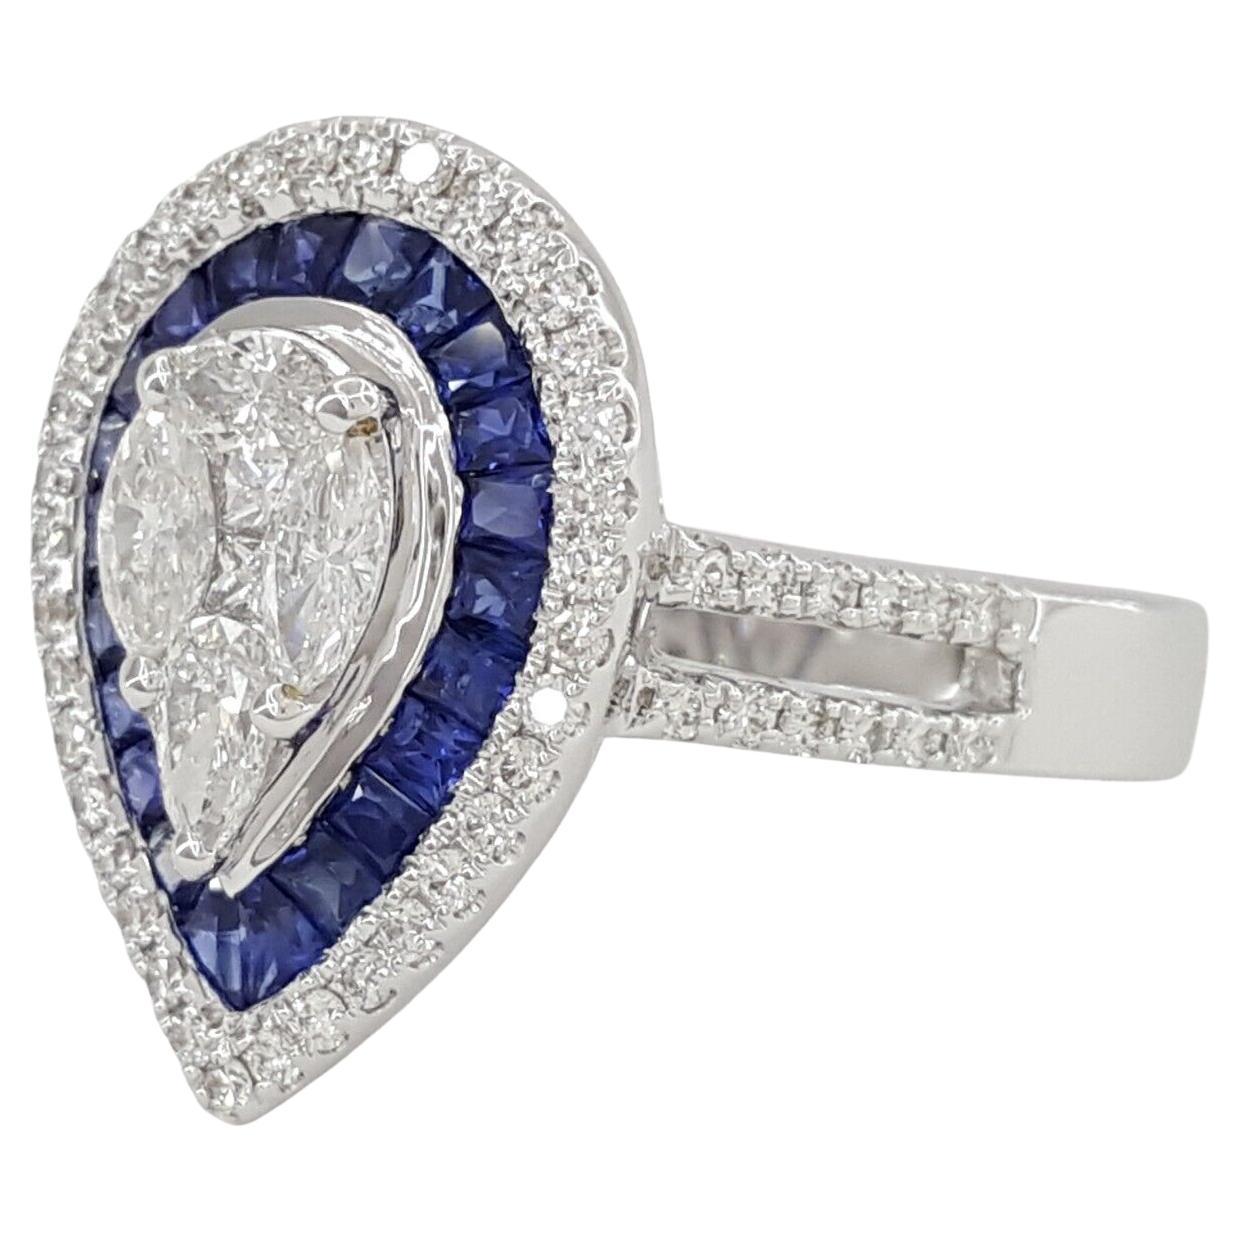 Diamond & Sapphire Cluster Pear Shape Round Brilliant & Marquise Cut Diamond Engagement Ring. 